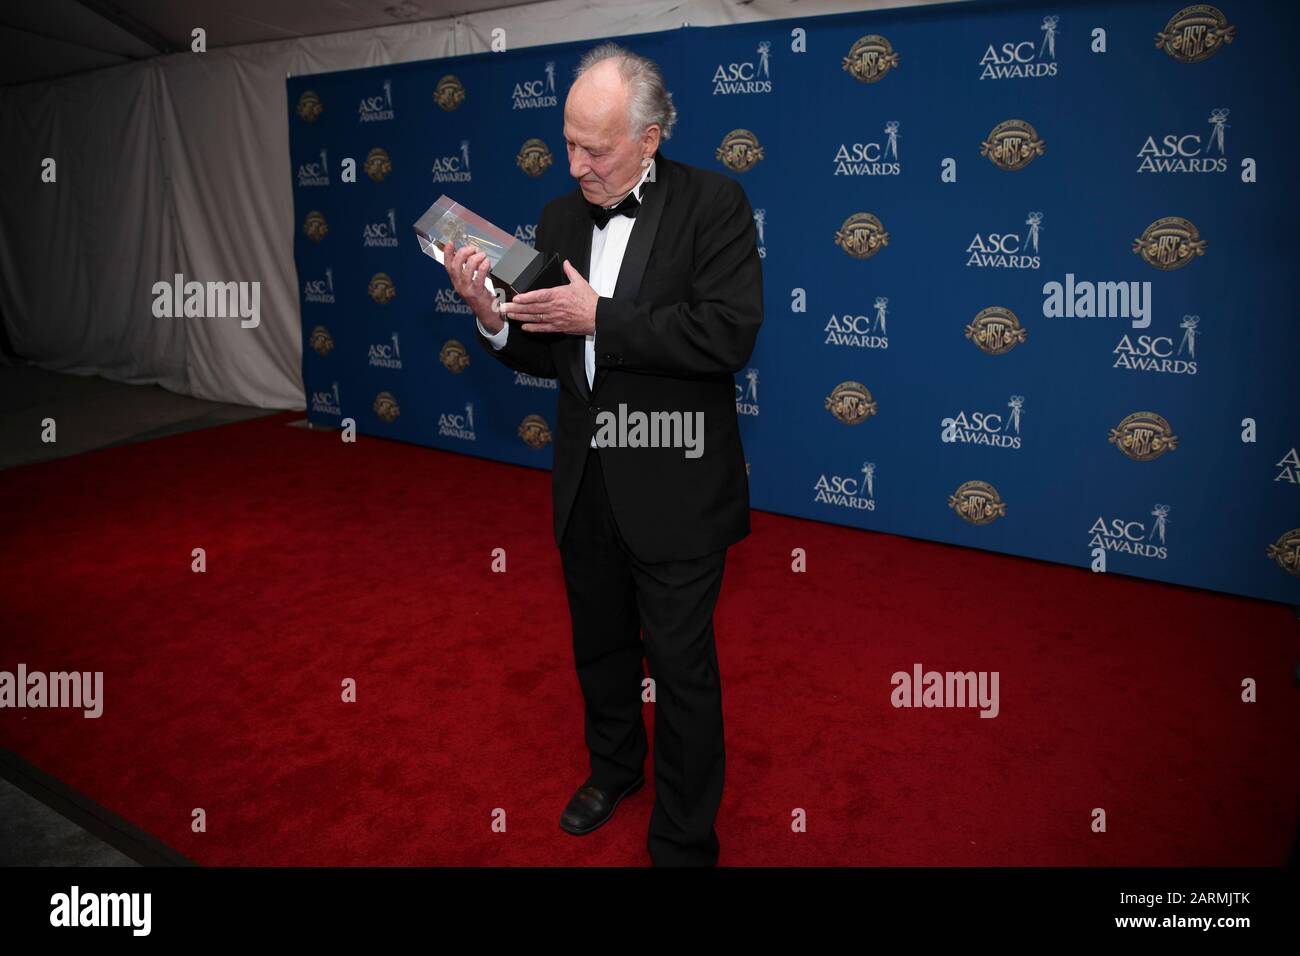 Werner Herzog partecipa alla 34th Annual American Society of Cinematographers ASC Awards alla Ray Dolby Ballroom di Los Angeles, California, USA, il 25 gennaio 2020. Foto Stock